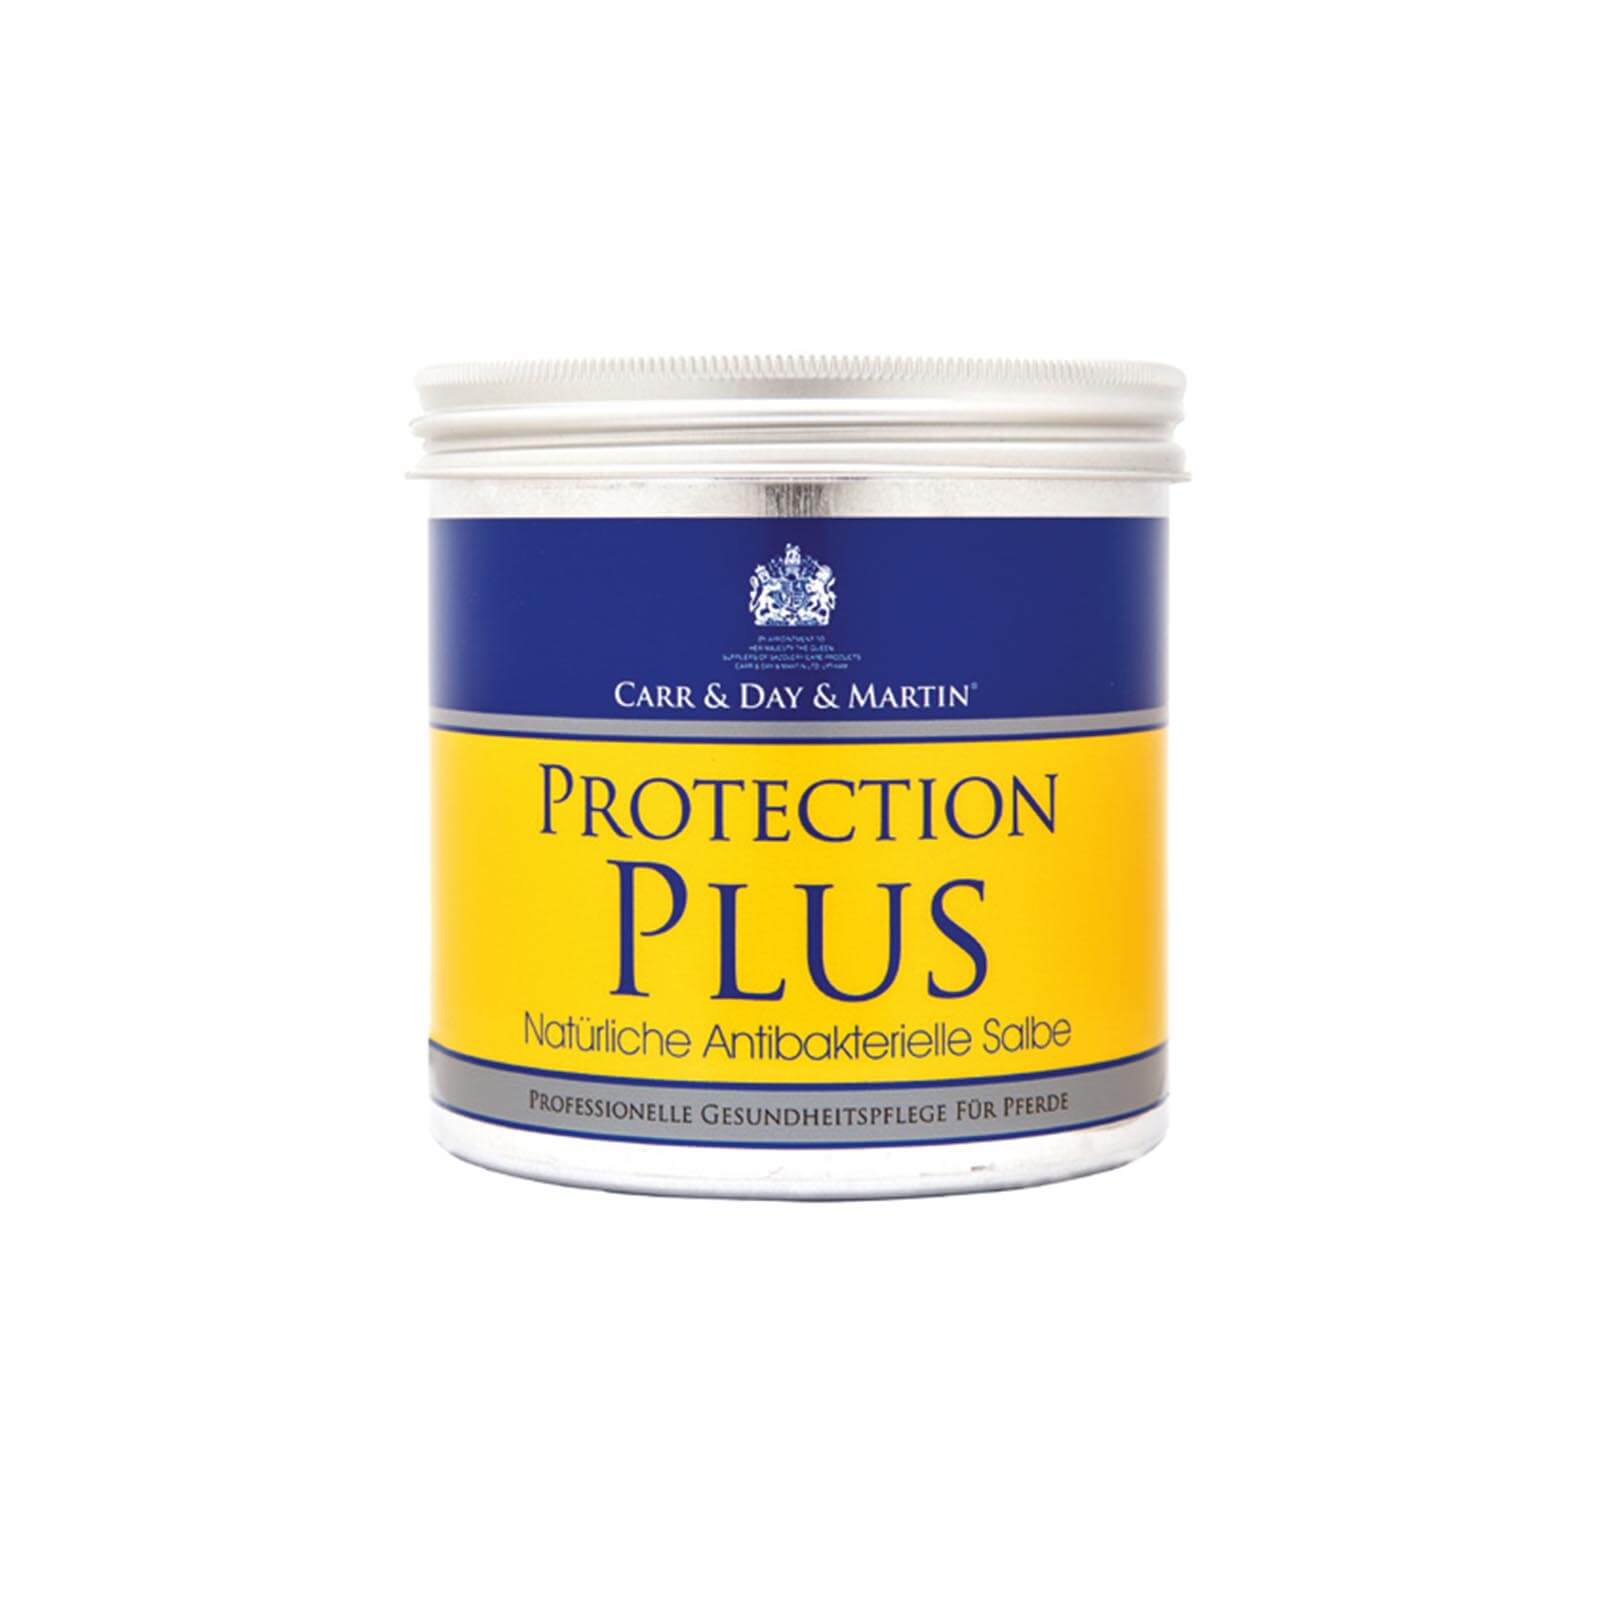 Carr & Day & Martin Protection Plus – kavalio